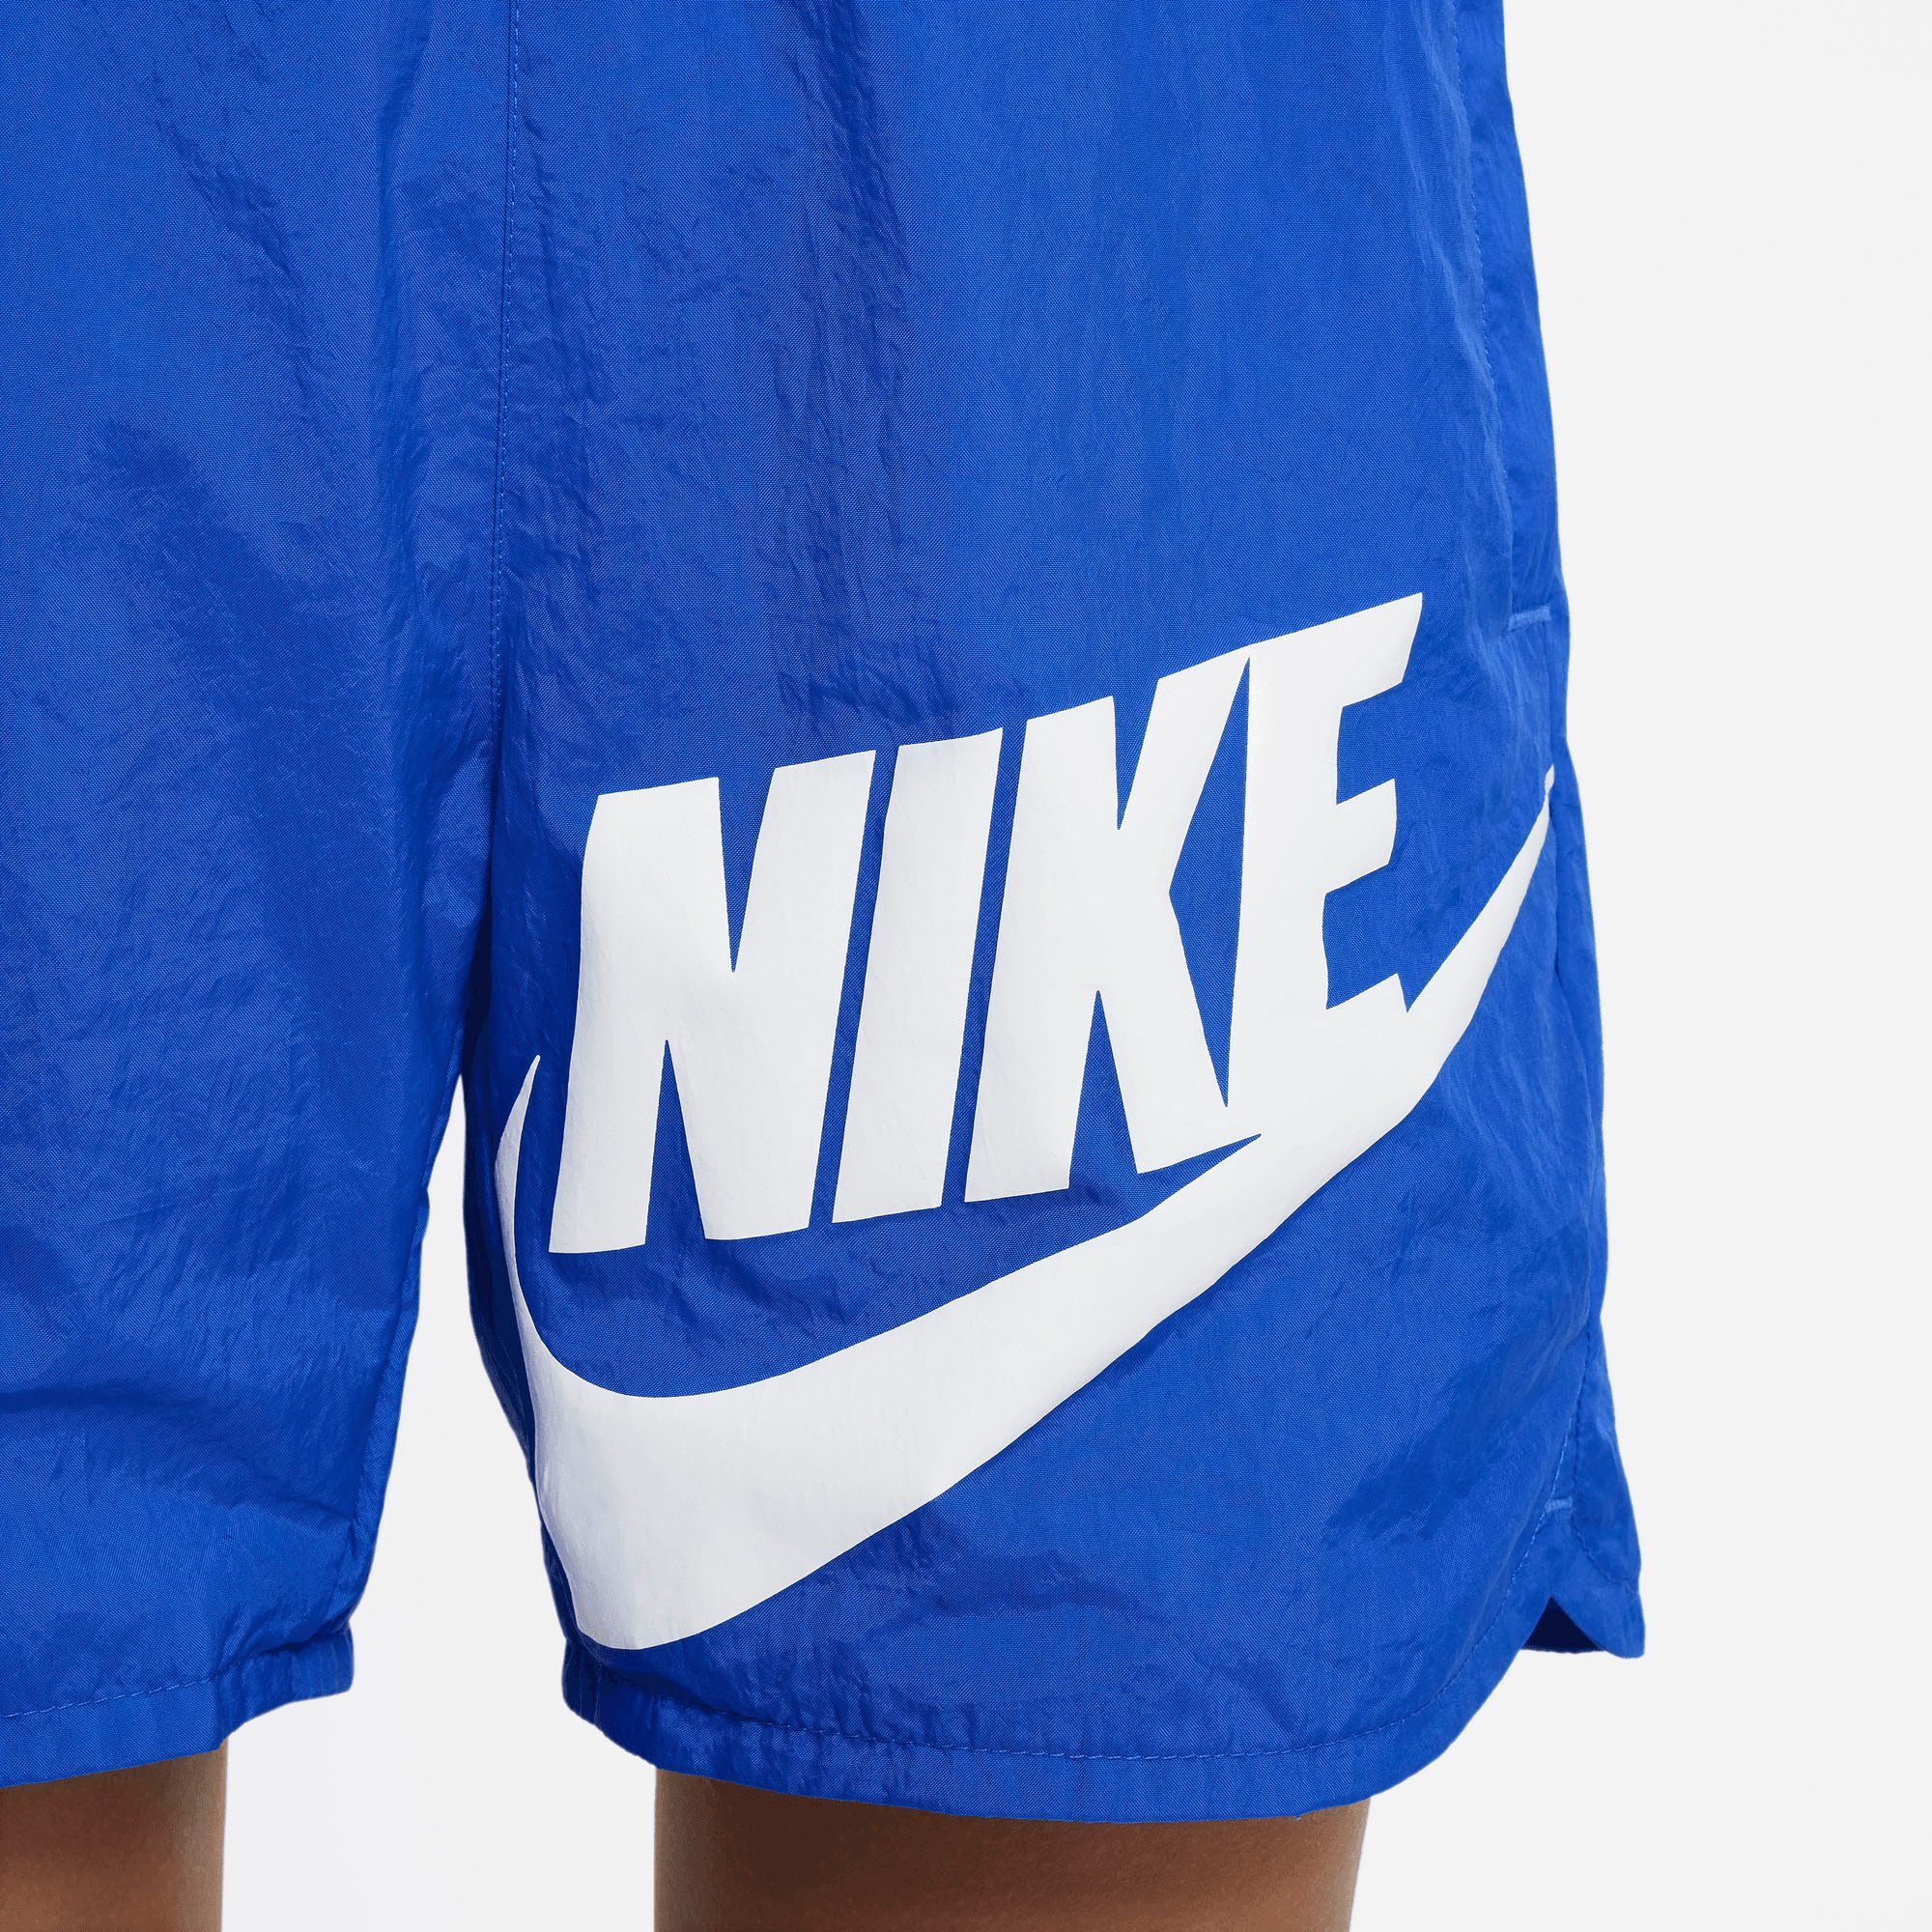 Nike Sportswear Shorts Big Kids' (Boys) blau Shorts Woven